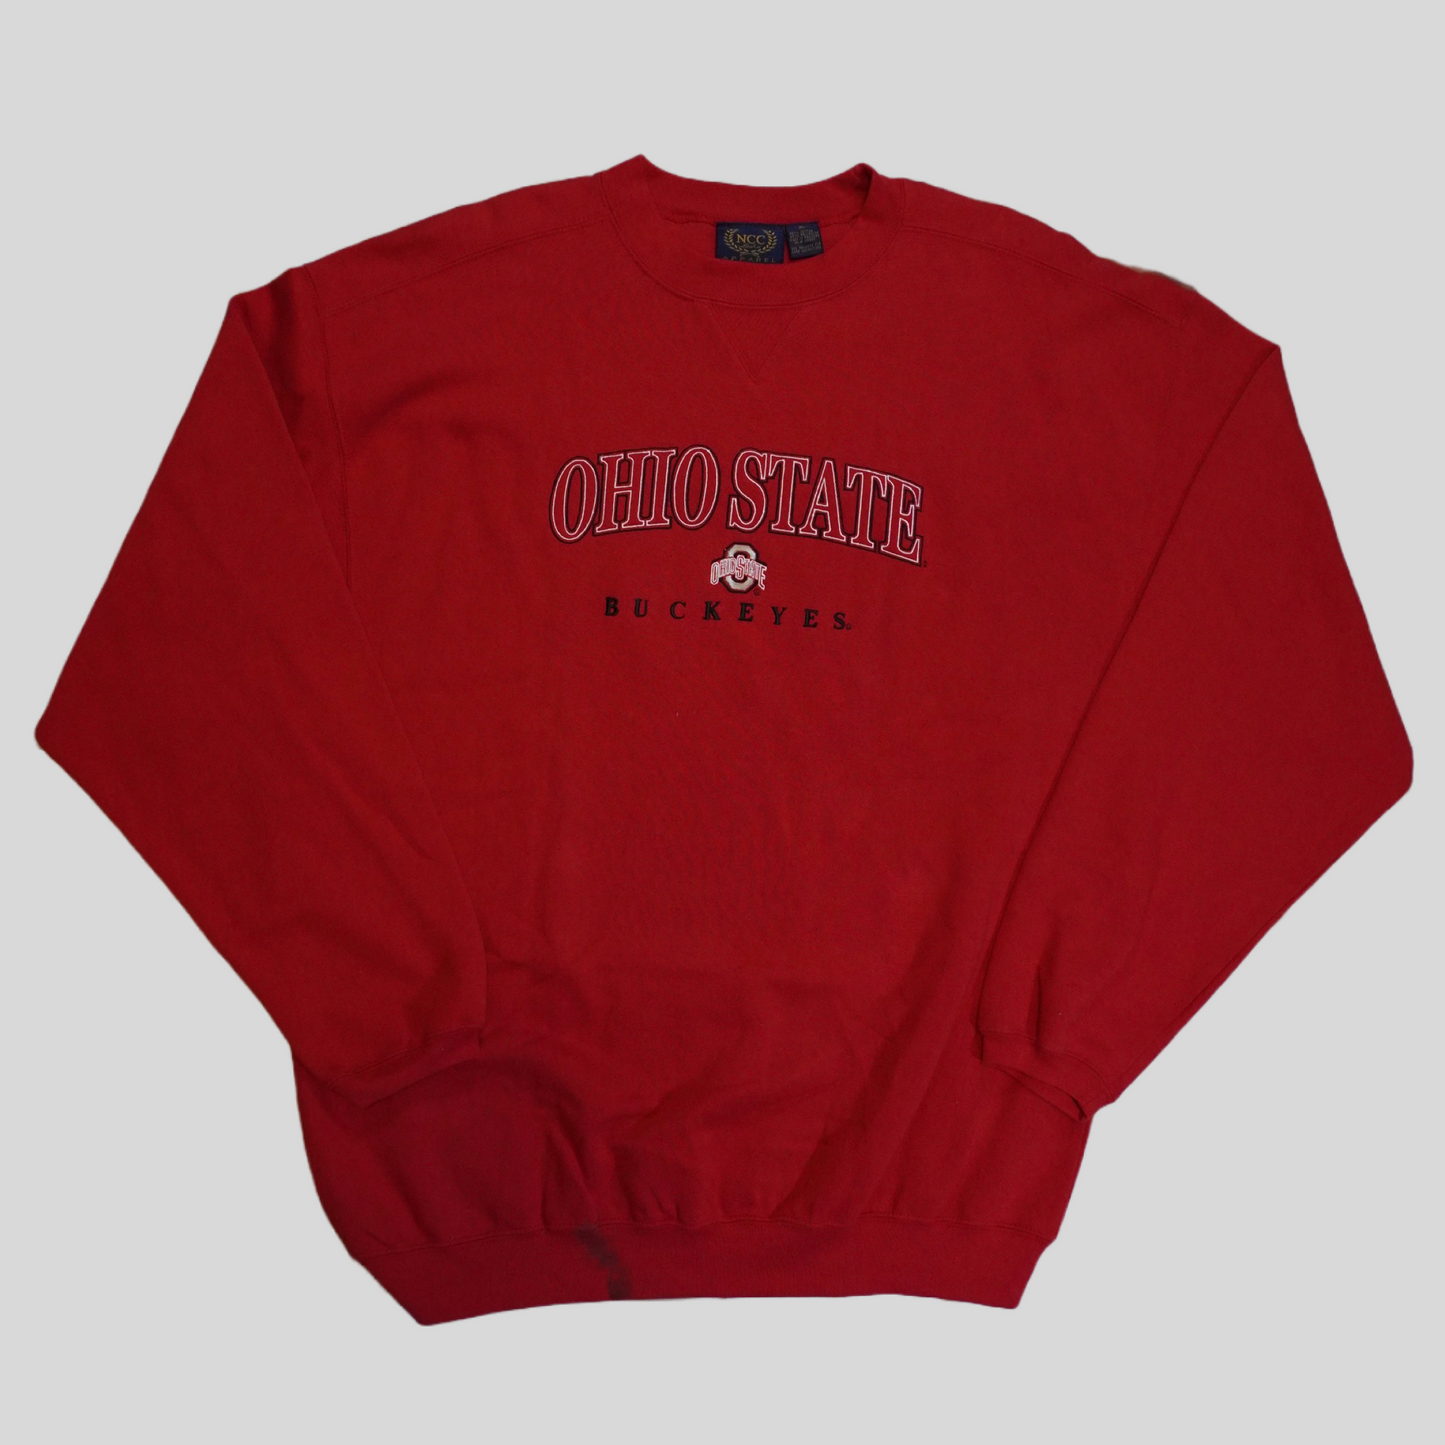 (XL) Red Ohio State University Sweatshirt by NCC Apparel